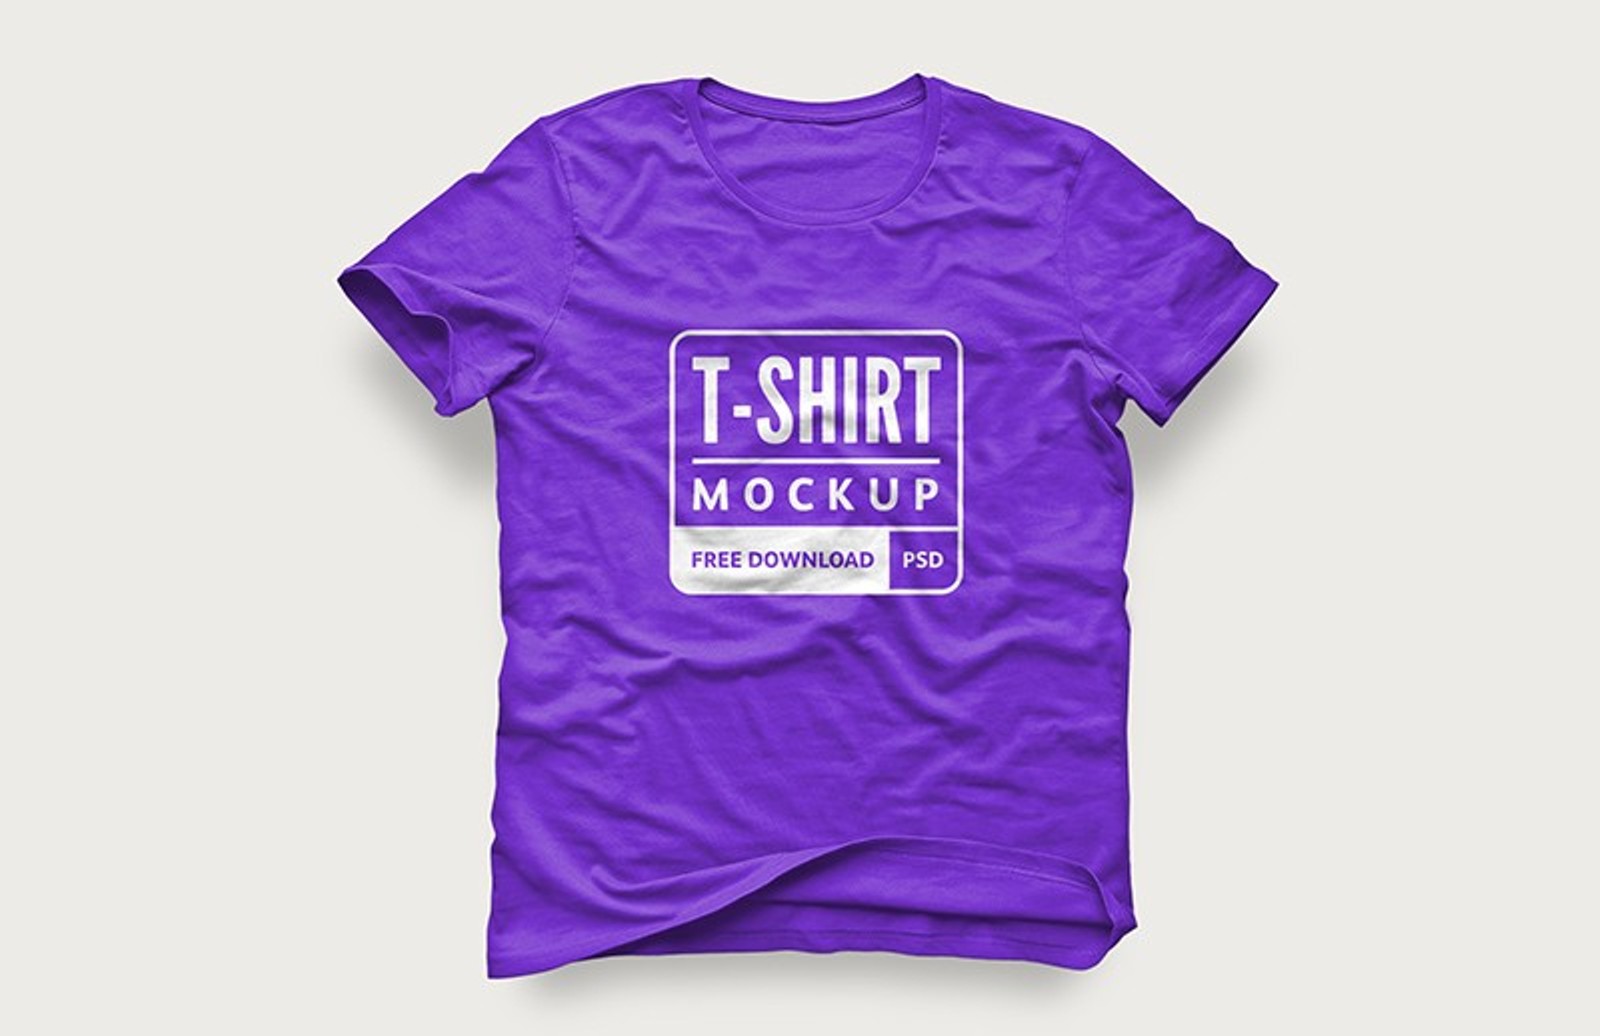 Download Unisex T-Shirt Mockup PSD - Free Download